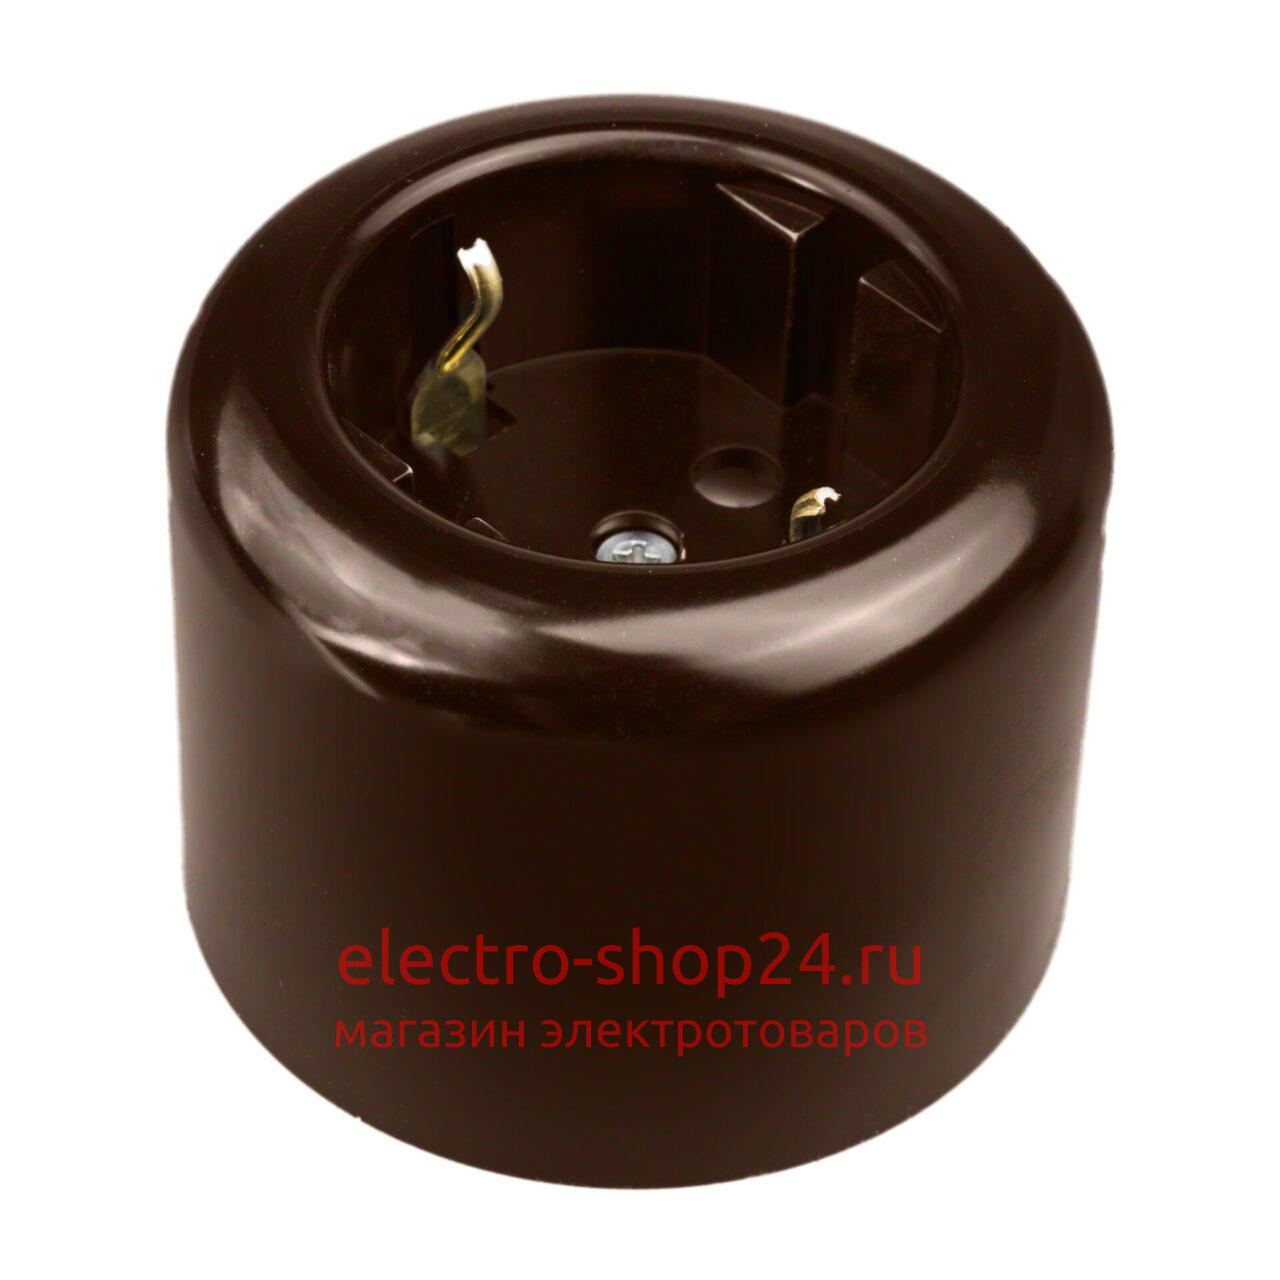 Розетка с/з Bironi Ришелье пластик коричневый R1-101-22 R1-101-22 - магазин электротехники Electroshop